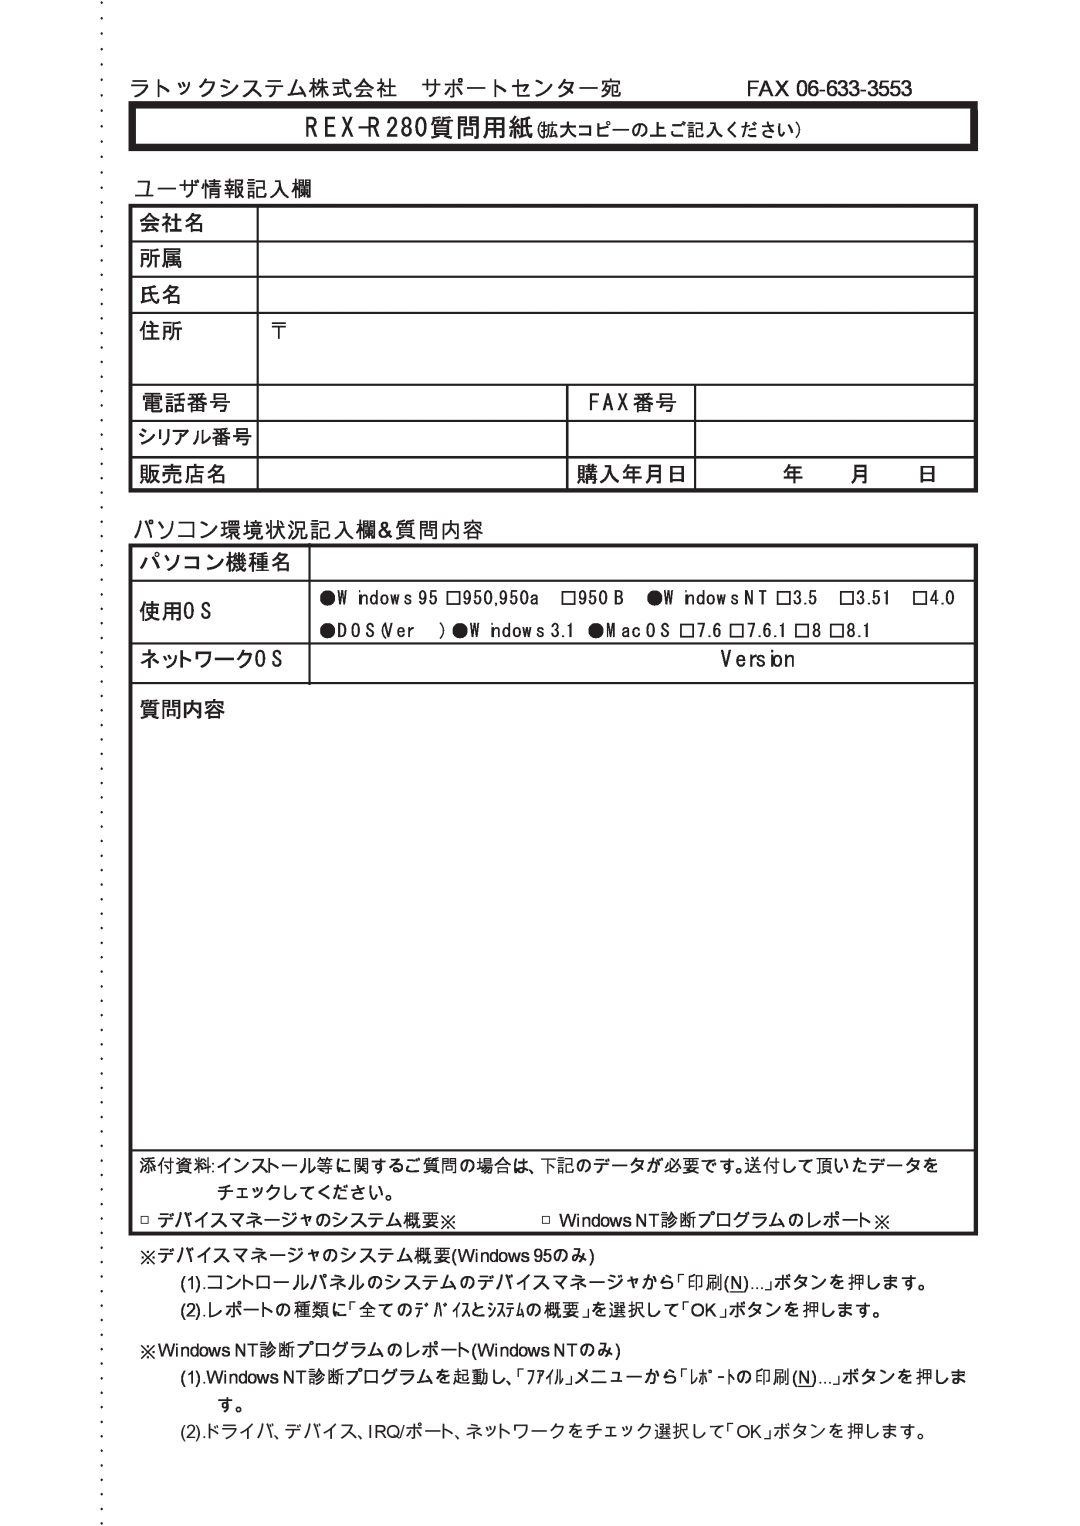 Ratoc Systems REX-R280 manual Fax番号, Version 